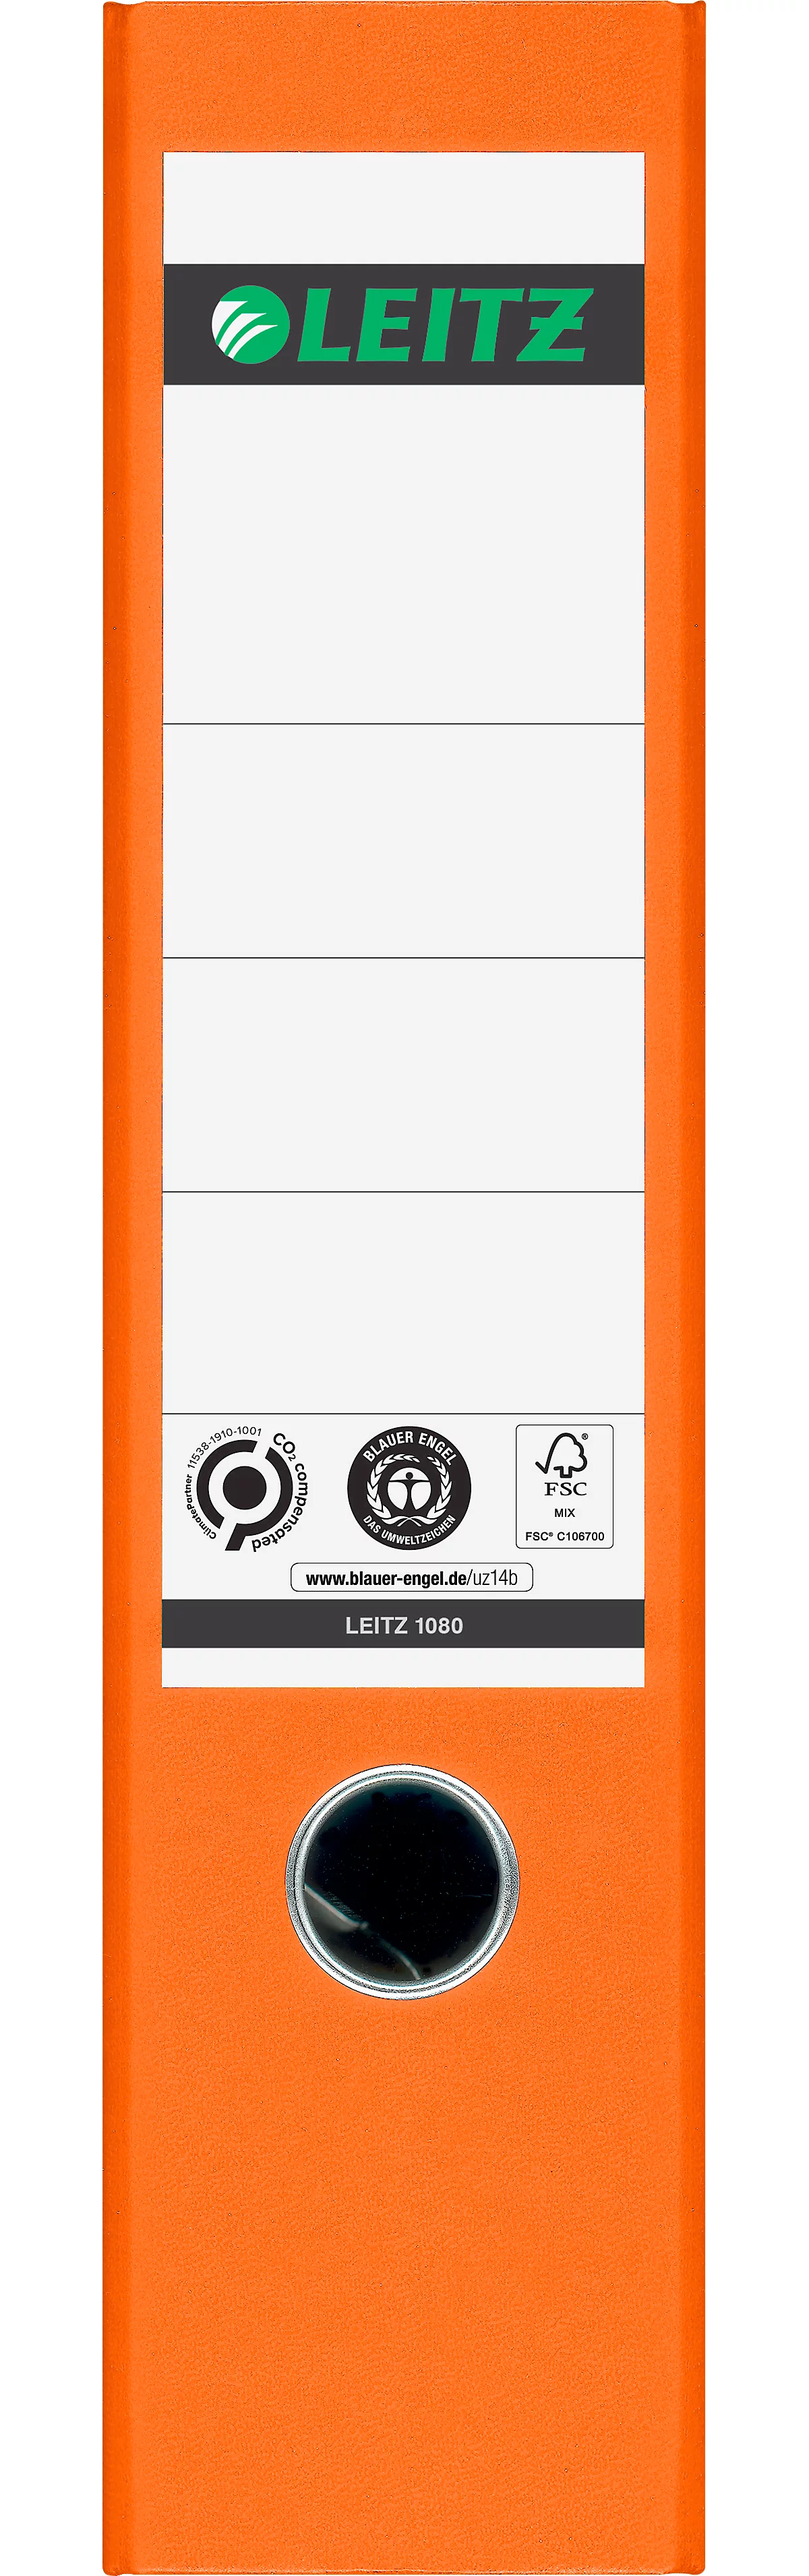 LEITZ® Carpeta 1080, DIN A4, ancho de lomo 80 mm, agujero para los dedos, etiqueta pegada en el lomo, clima neutro, cartón duro, 20 unidades, naranja